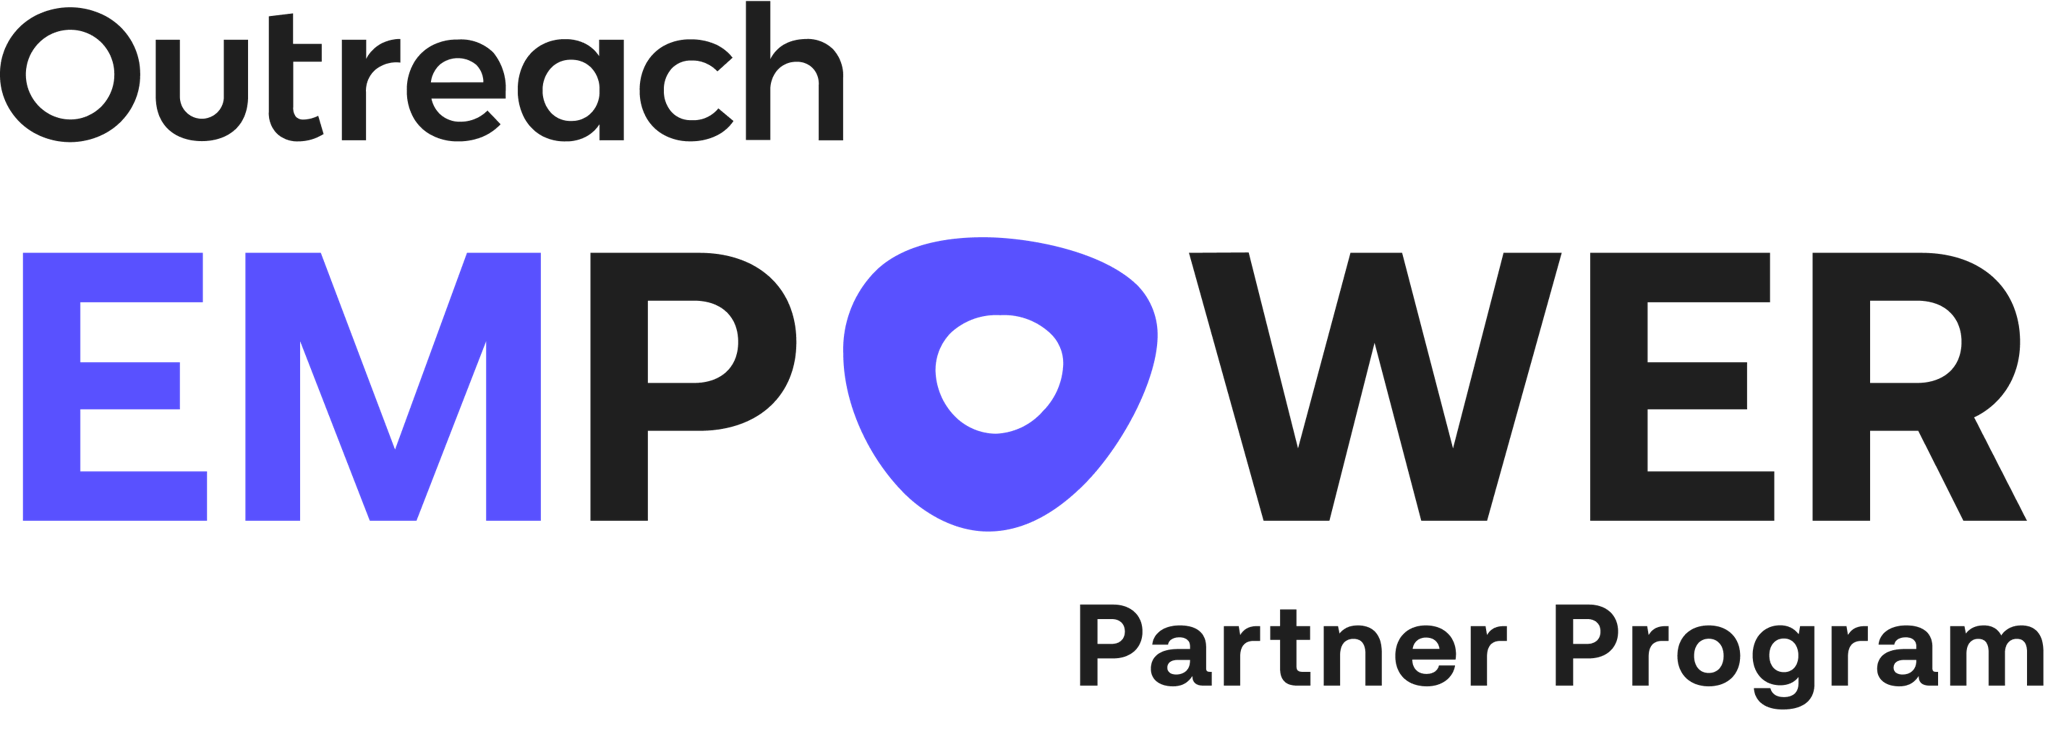 Empower partner logo